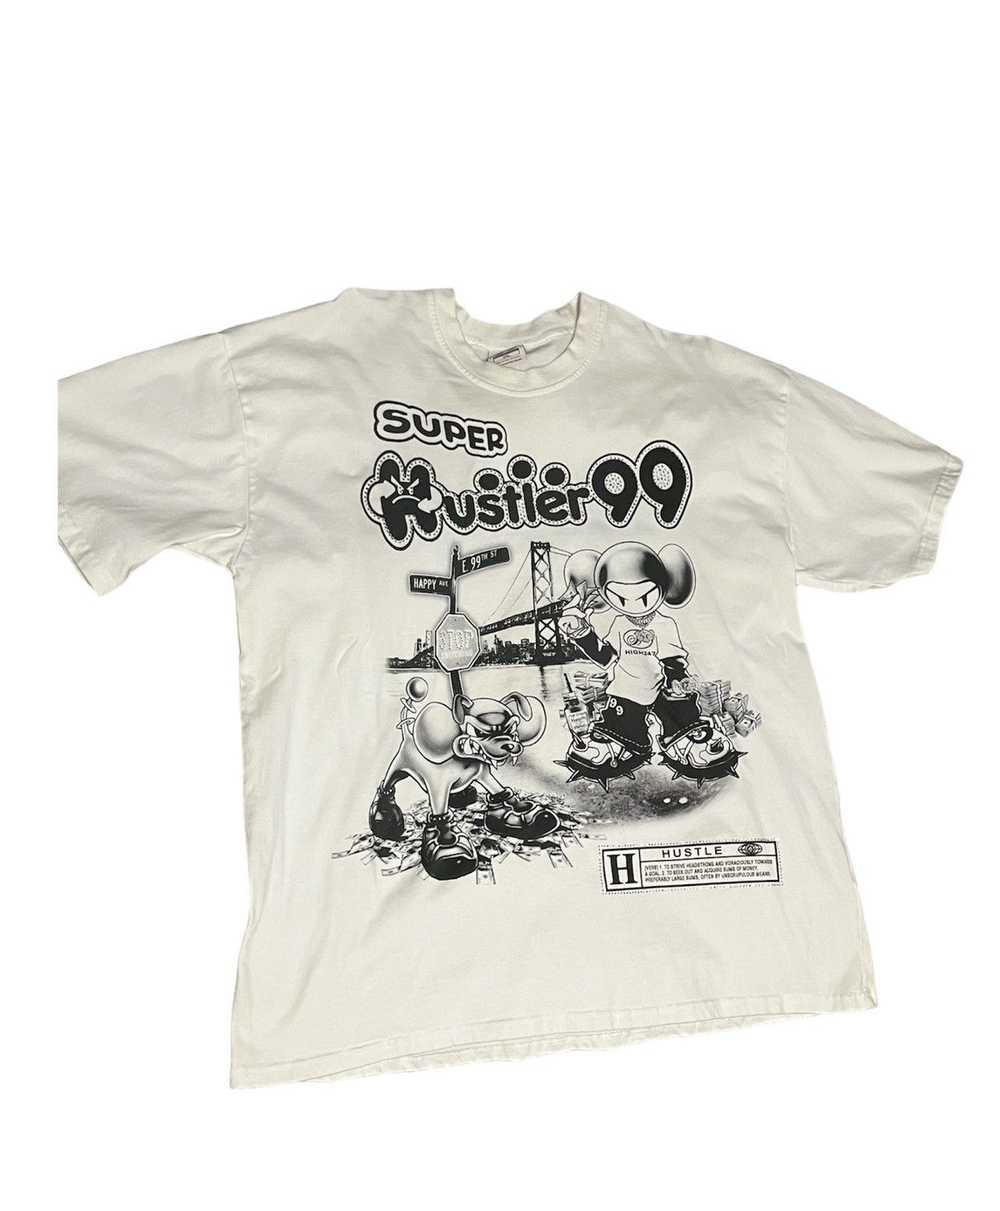 Stray Rats Online 99 hustler shirt - image 1